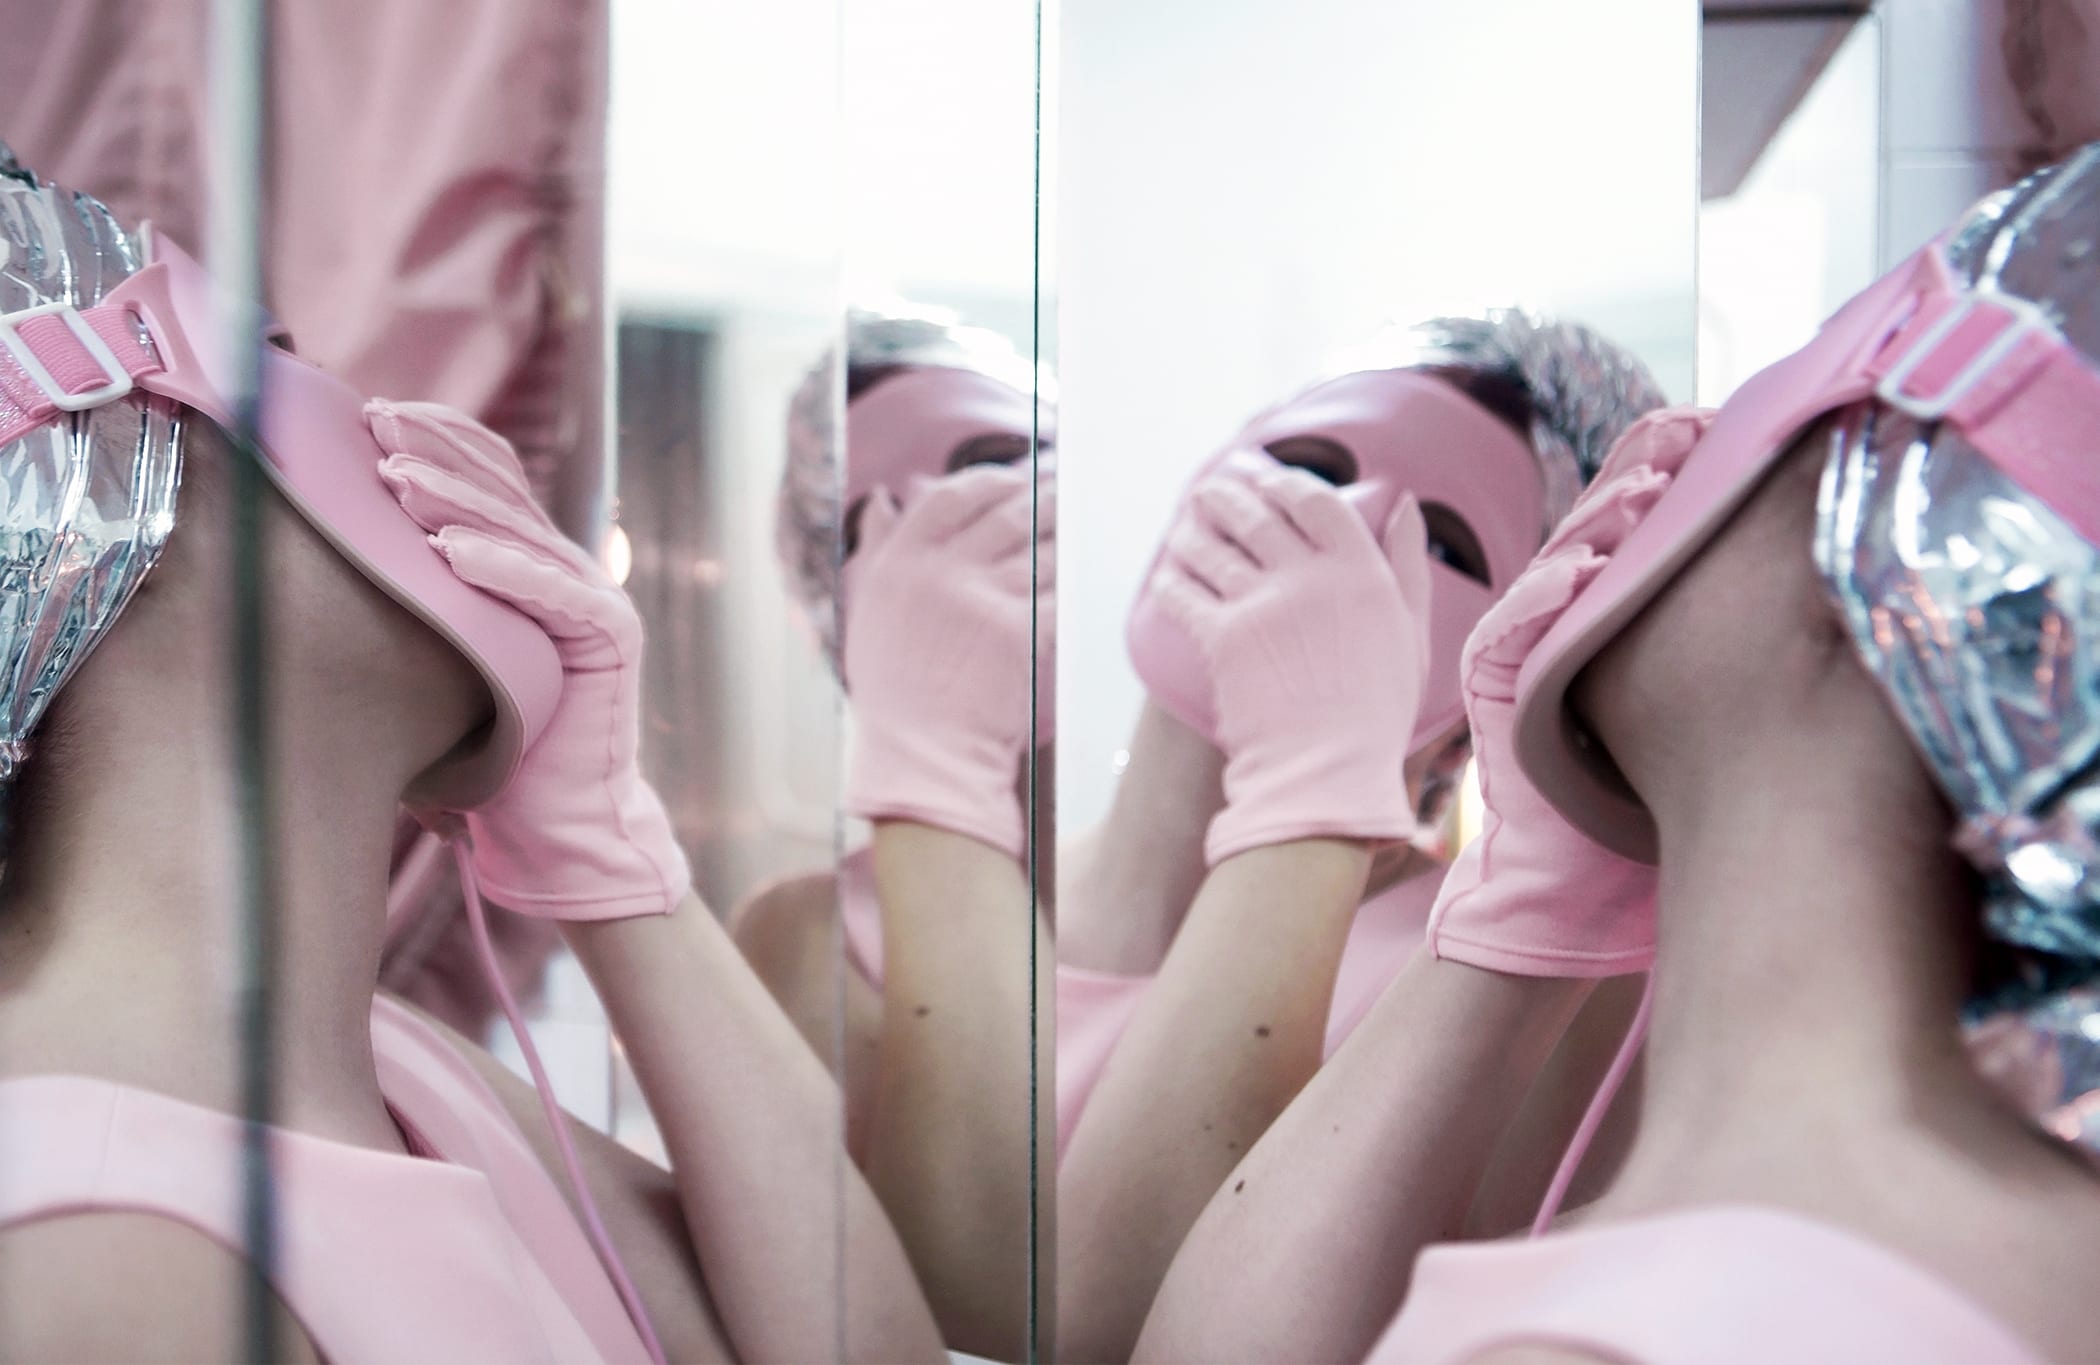 Massage Mask, 2015 © Juno Calypso